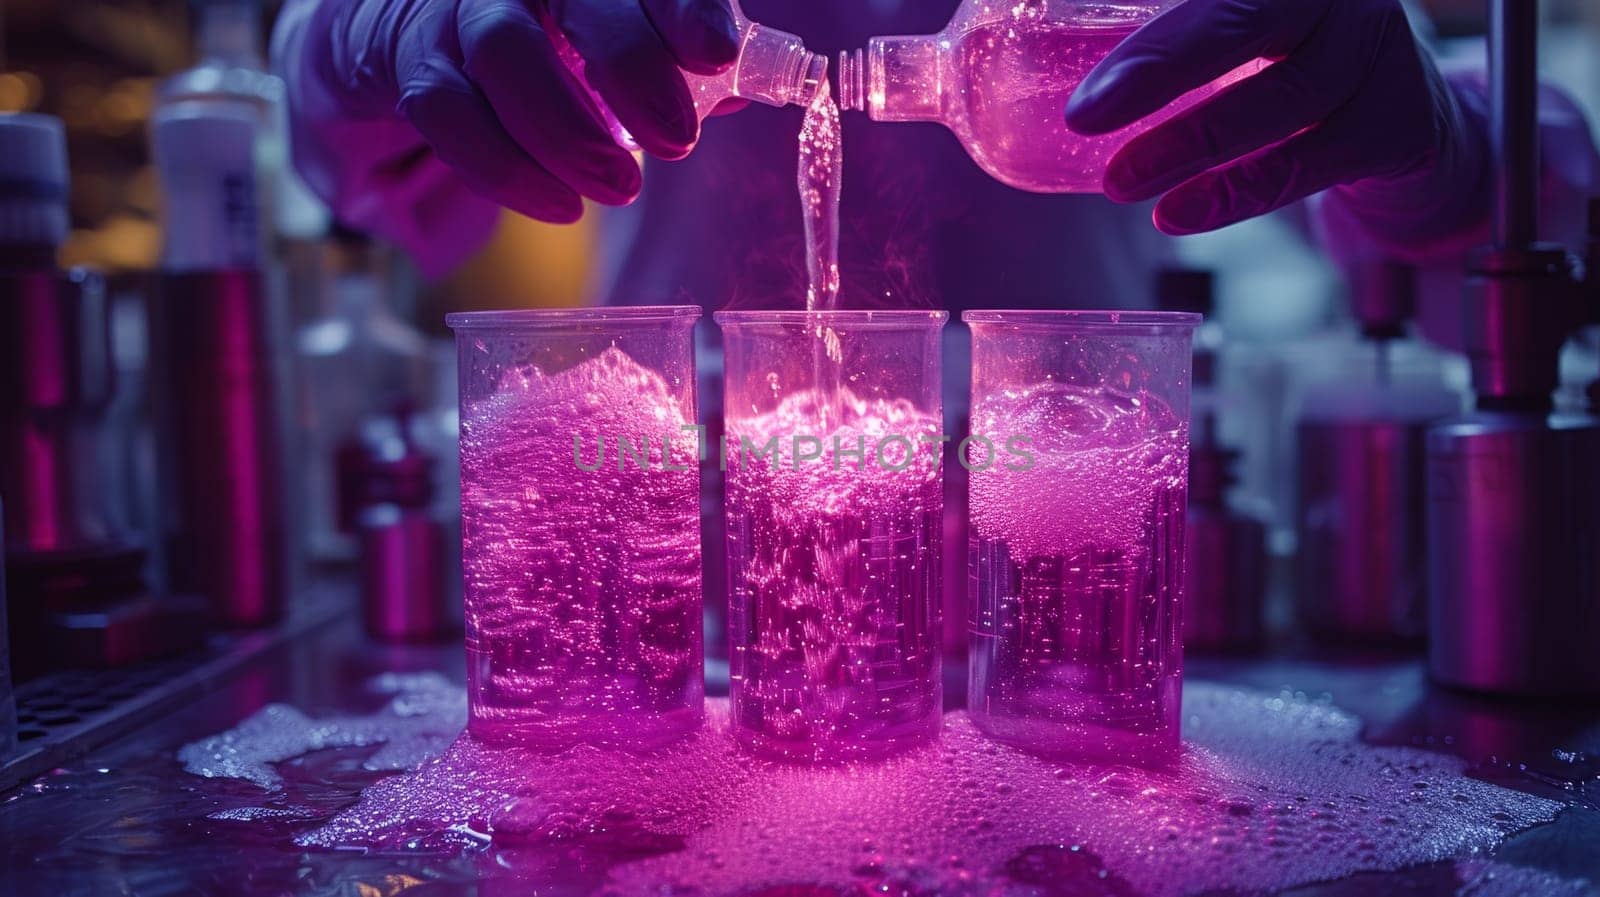 During a science experiment, a biotech scientist pours purple liquid